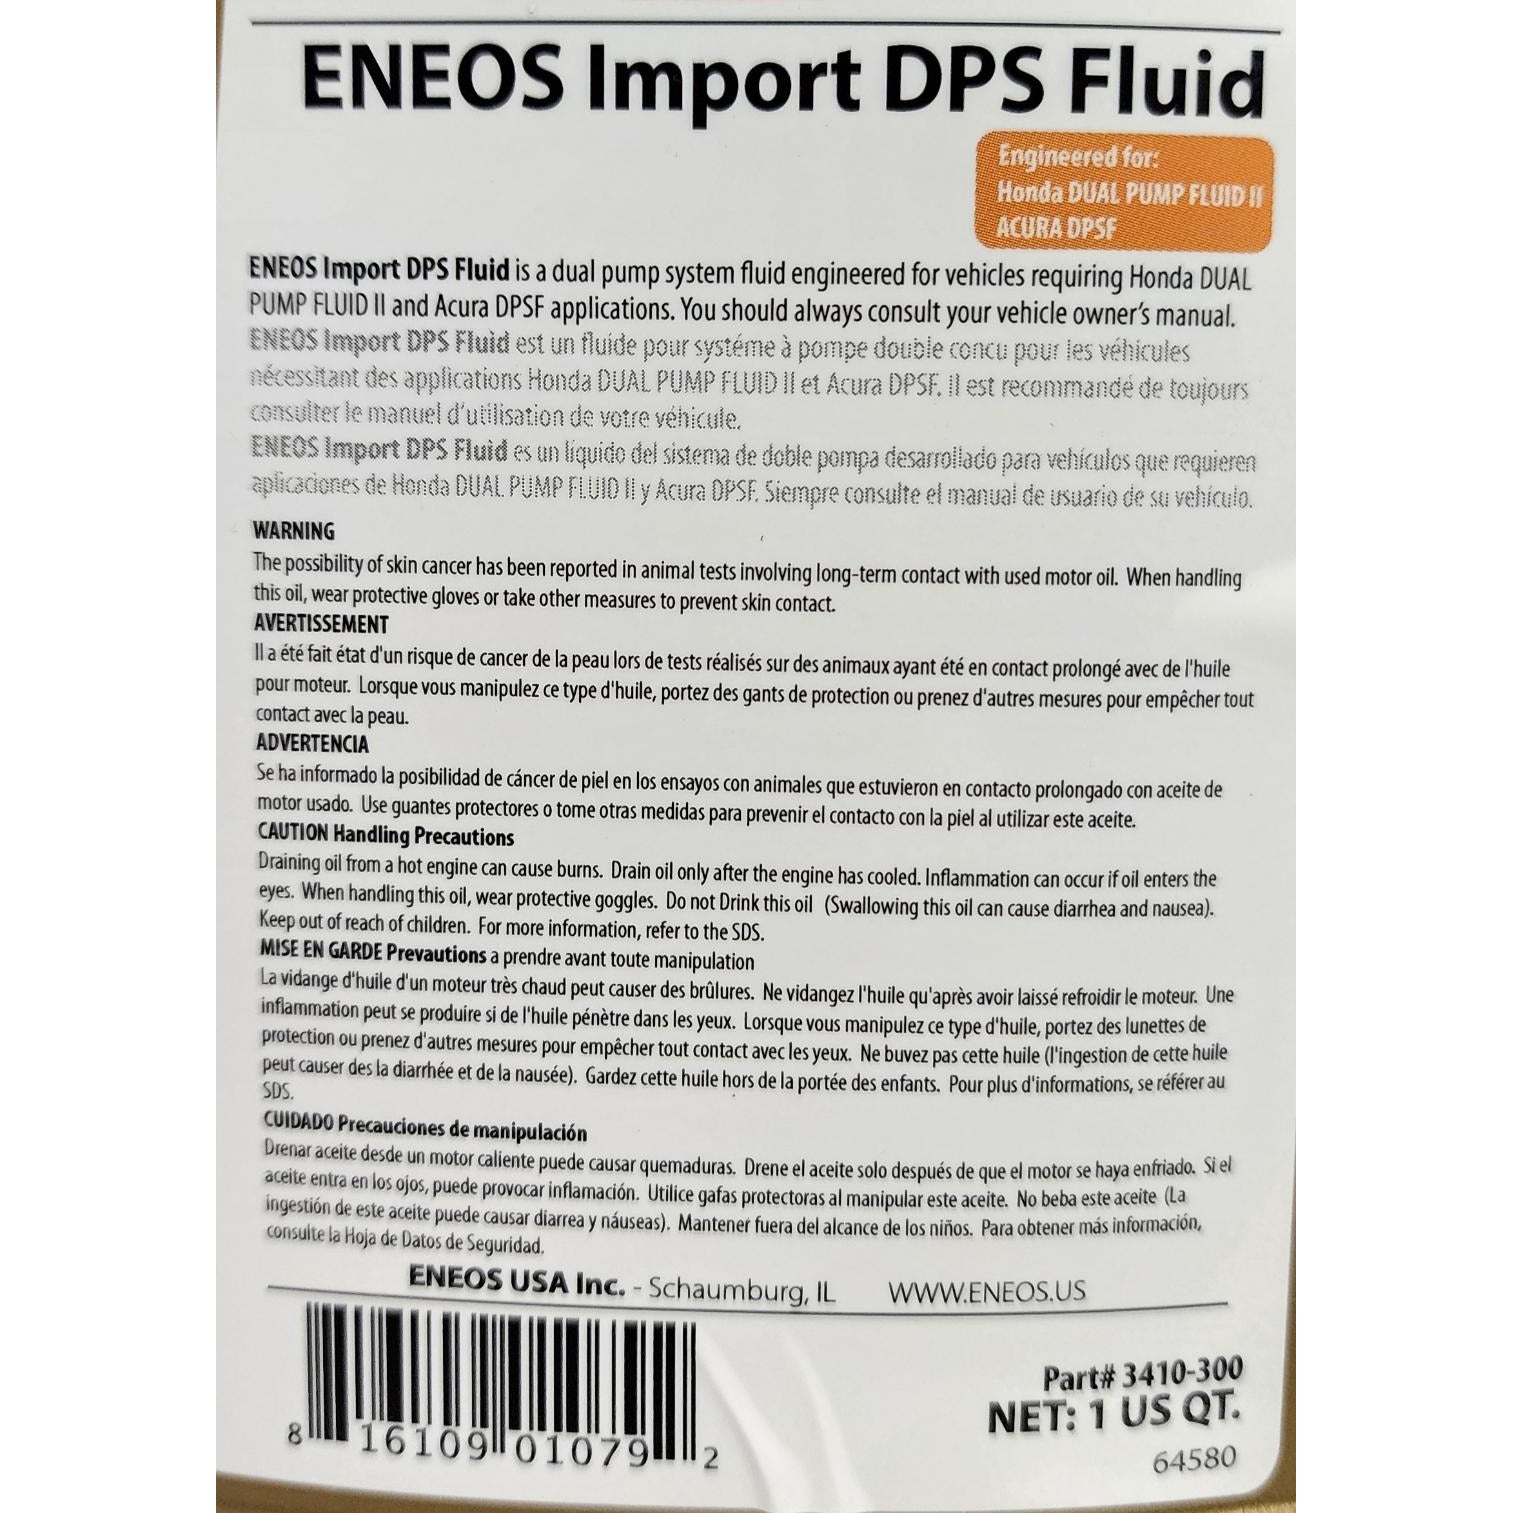 WPC J0150846729ENS ENEOS Import Dual Pump System Fluid (1 QT)